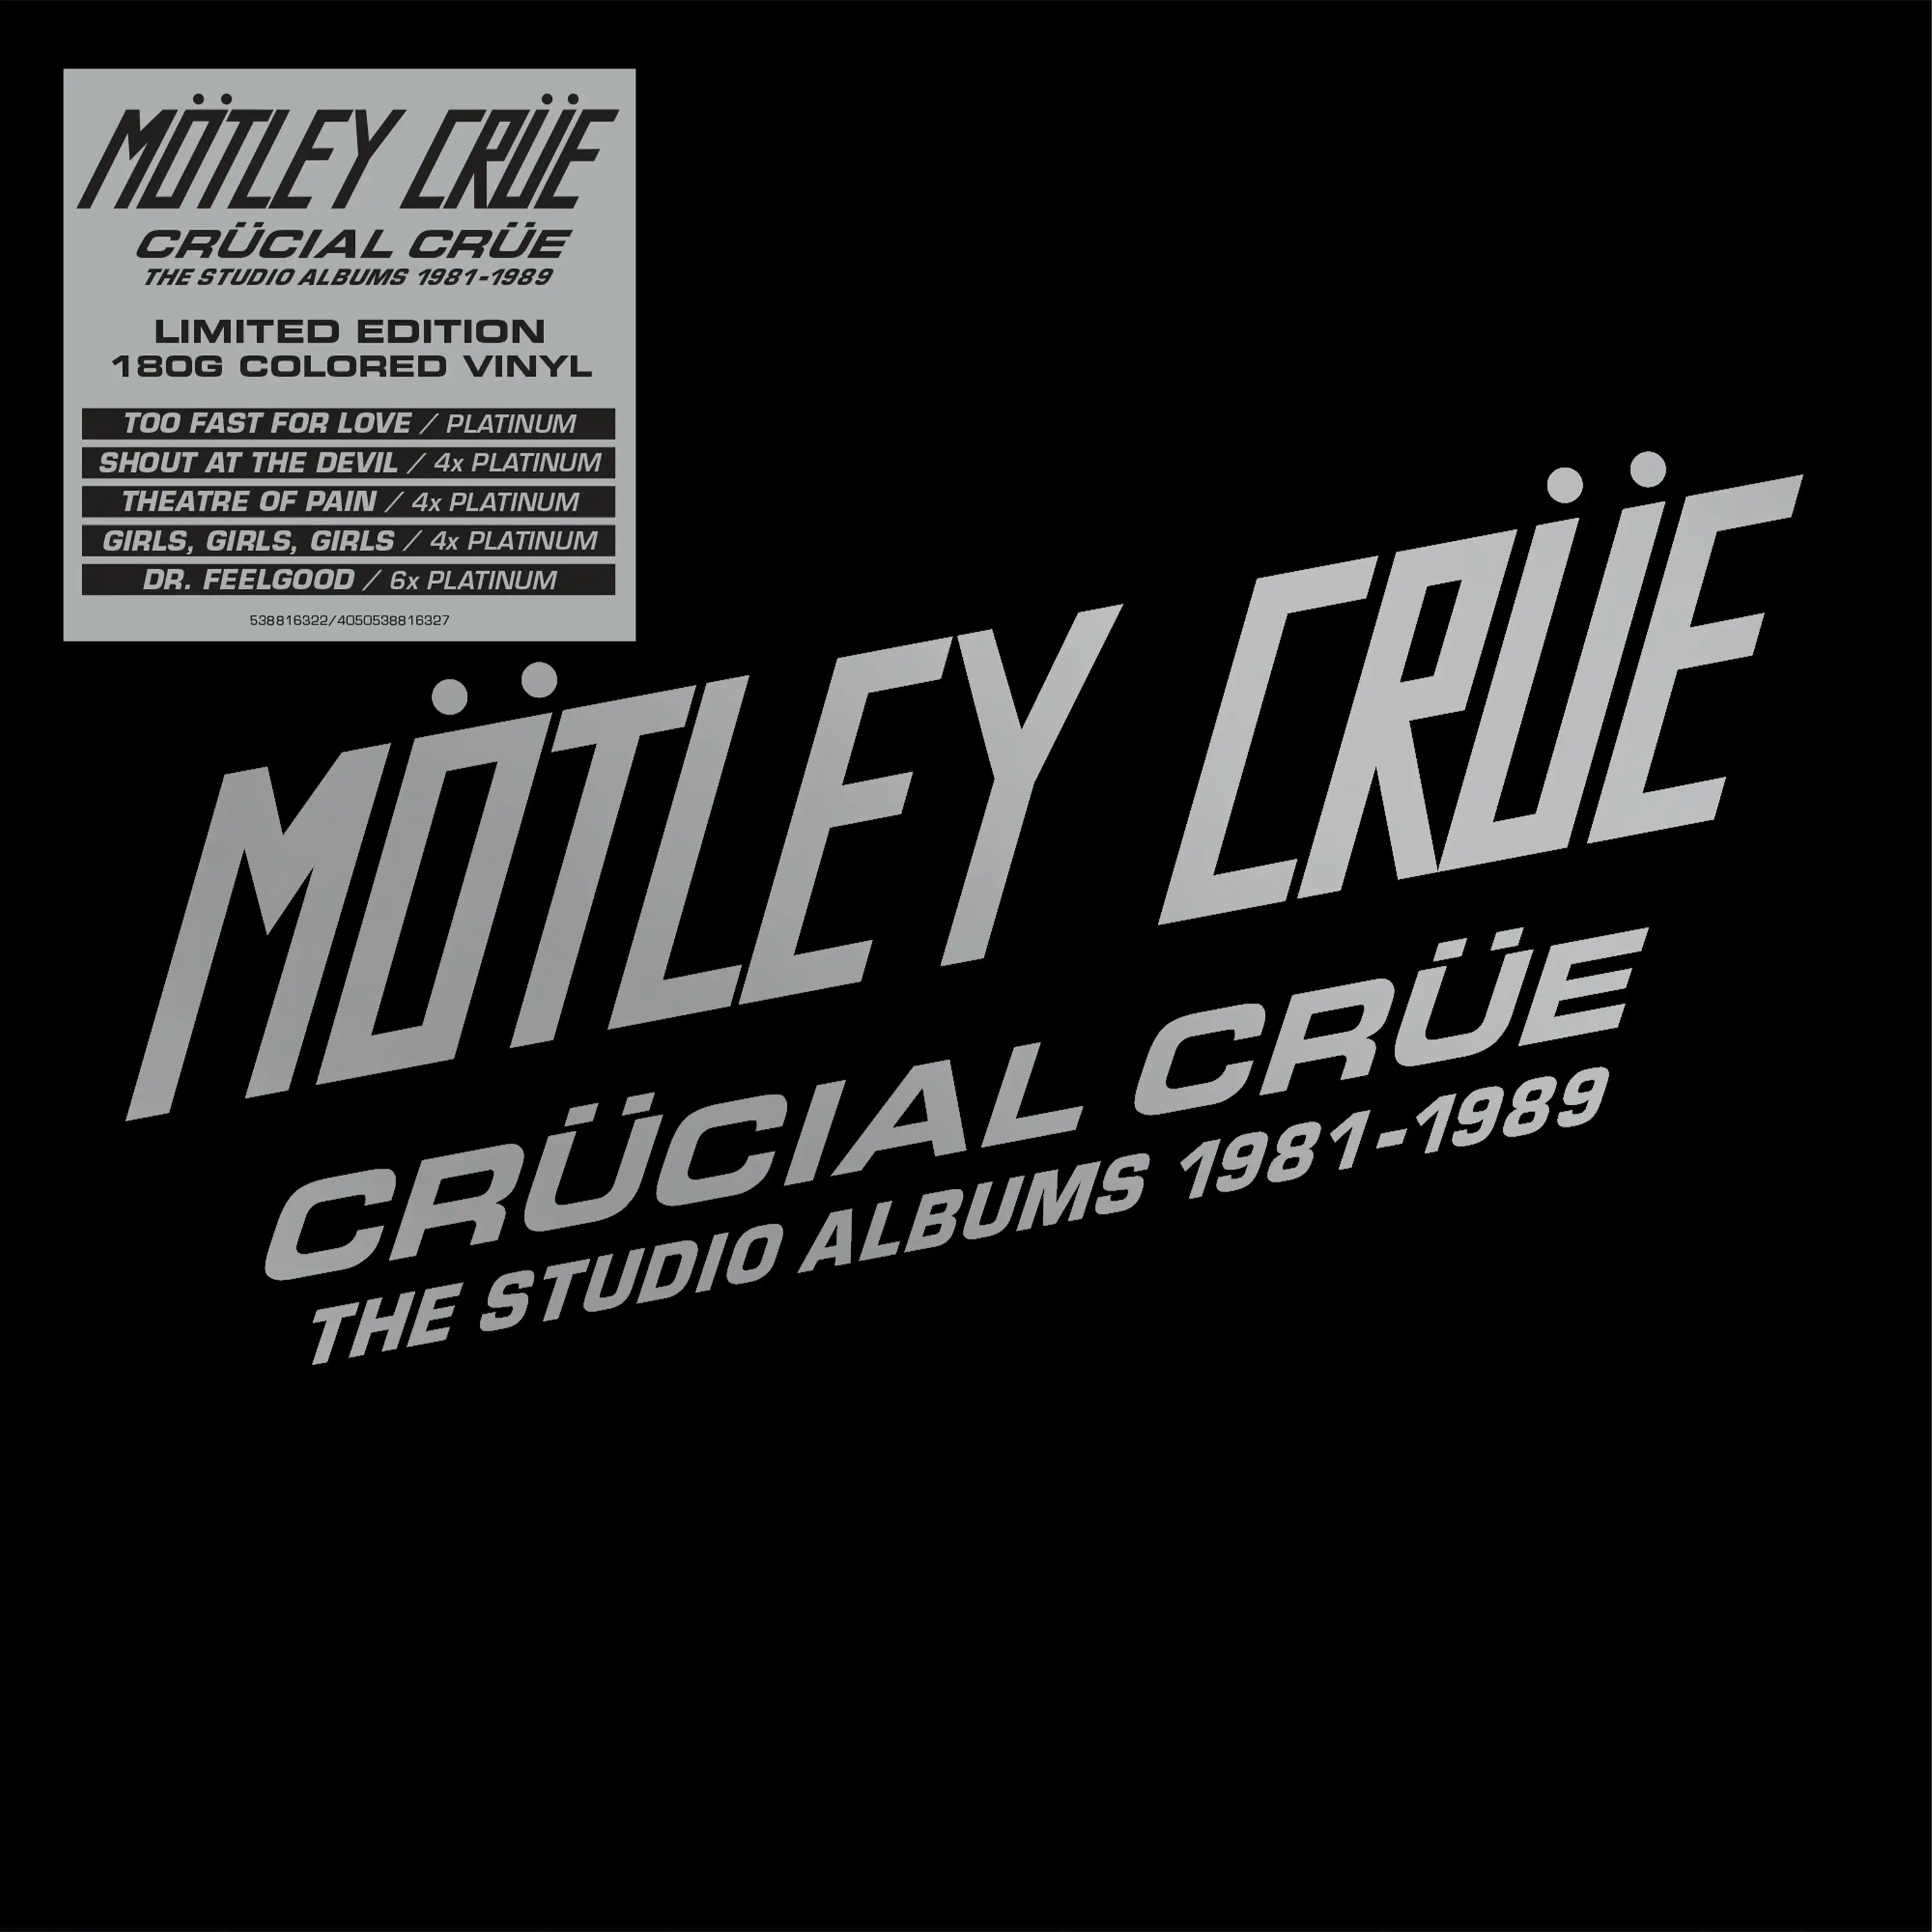 Album artwork for Crucial Crue The Studio Albums 1981-1989 by Motley Crue